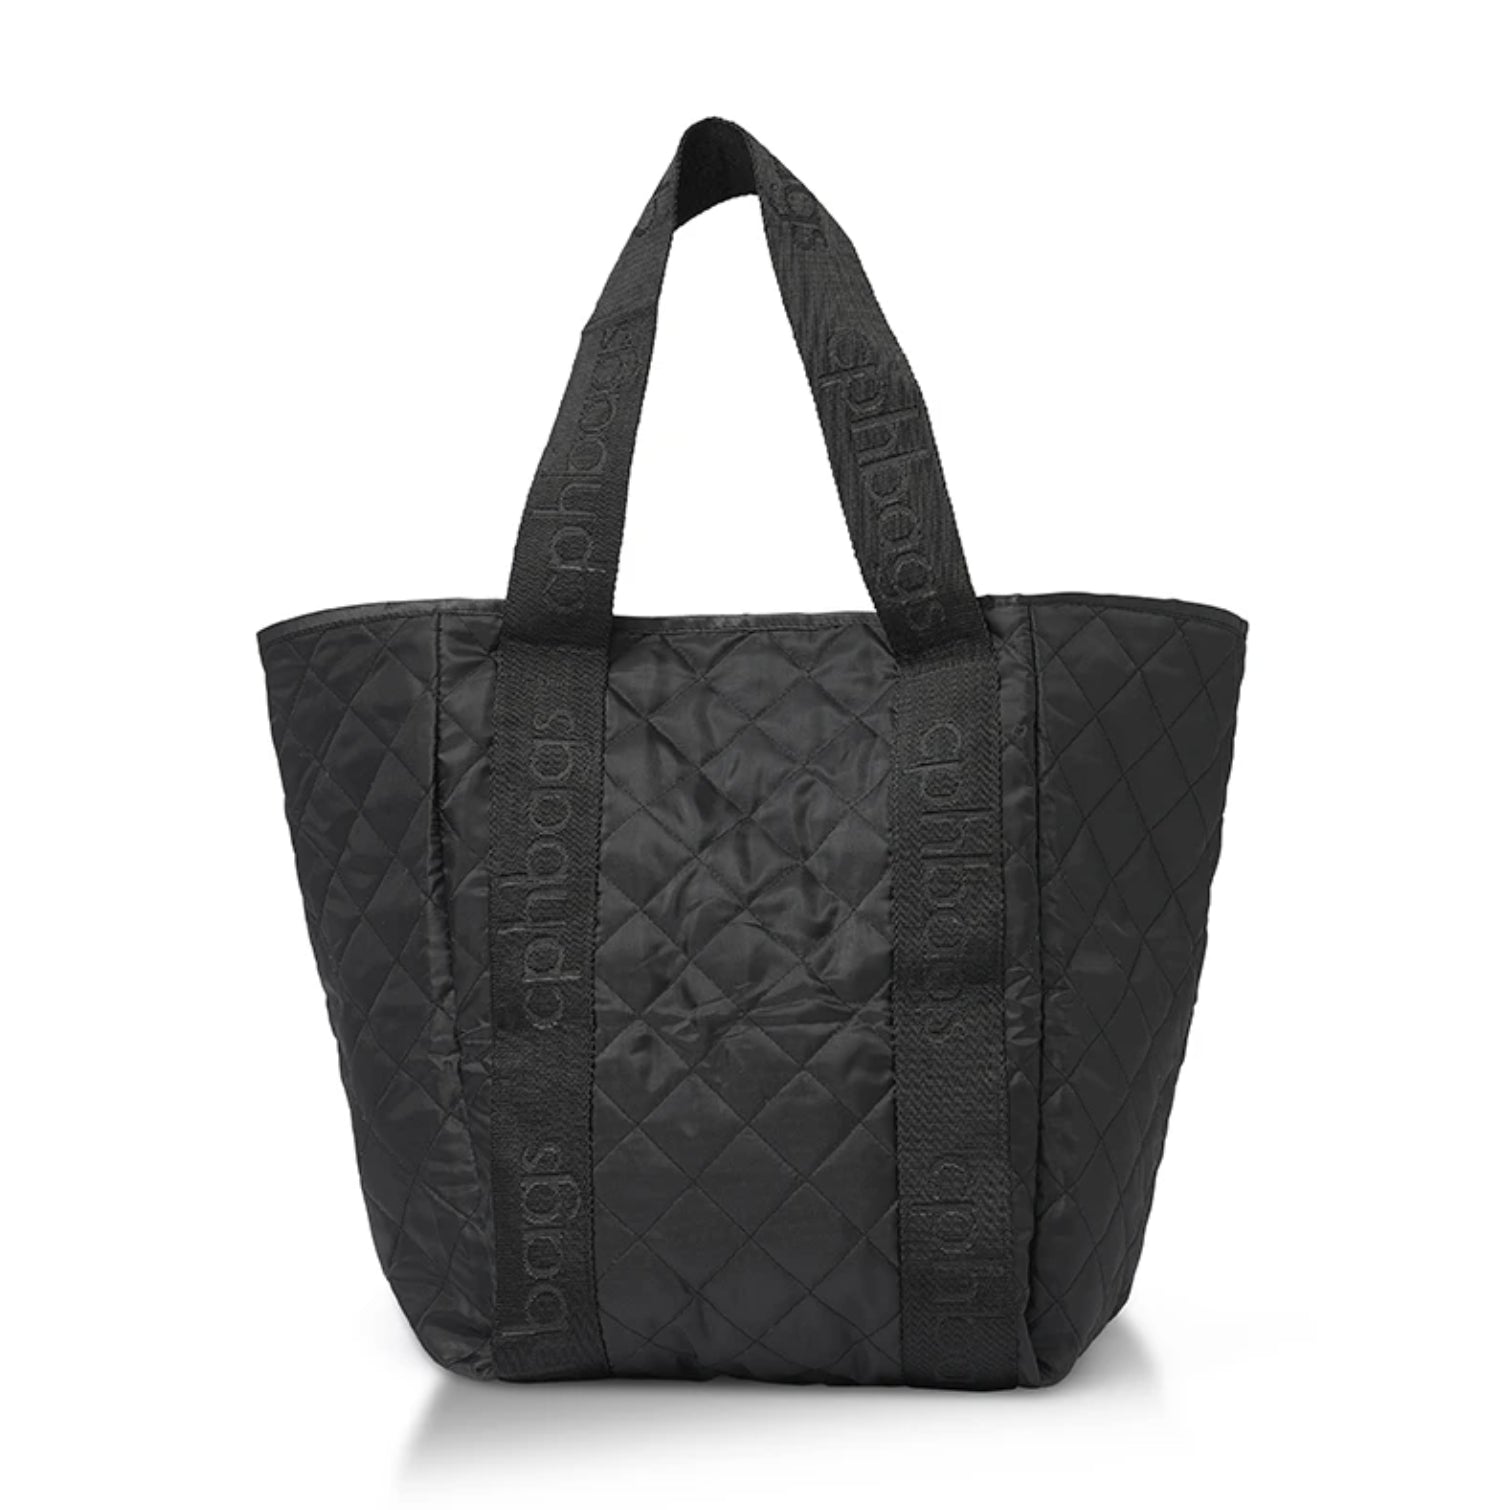 absolutte ineffektiv Glat Cph Bags - Shopping Taske - Sort – Frk. Mage